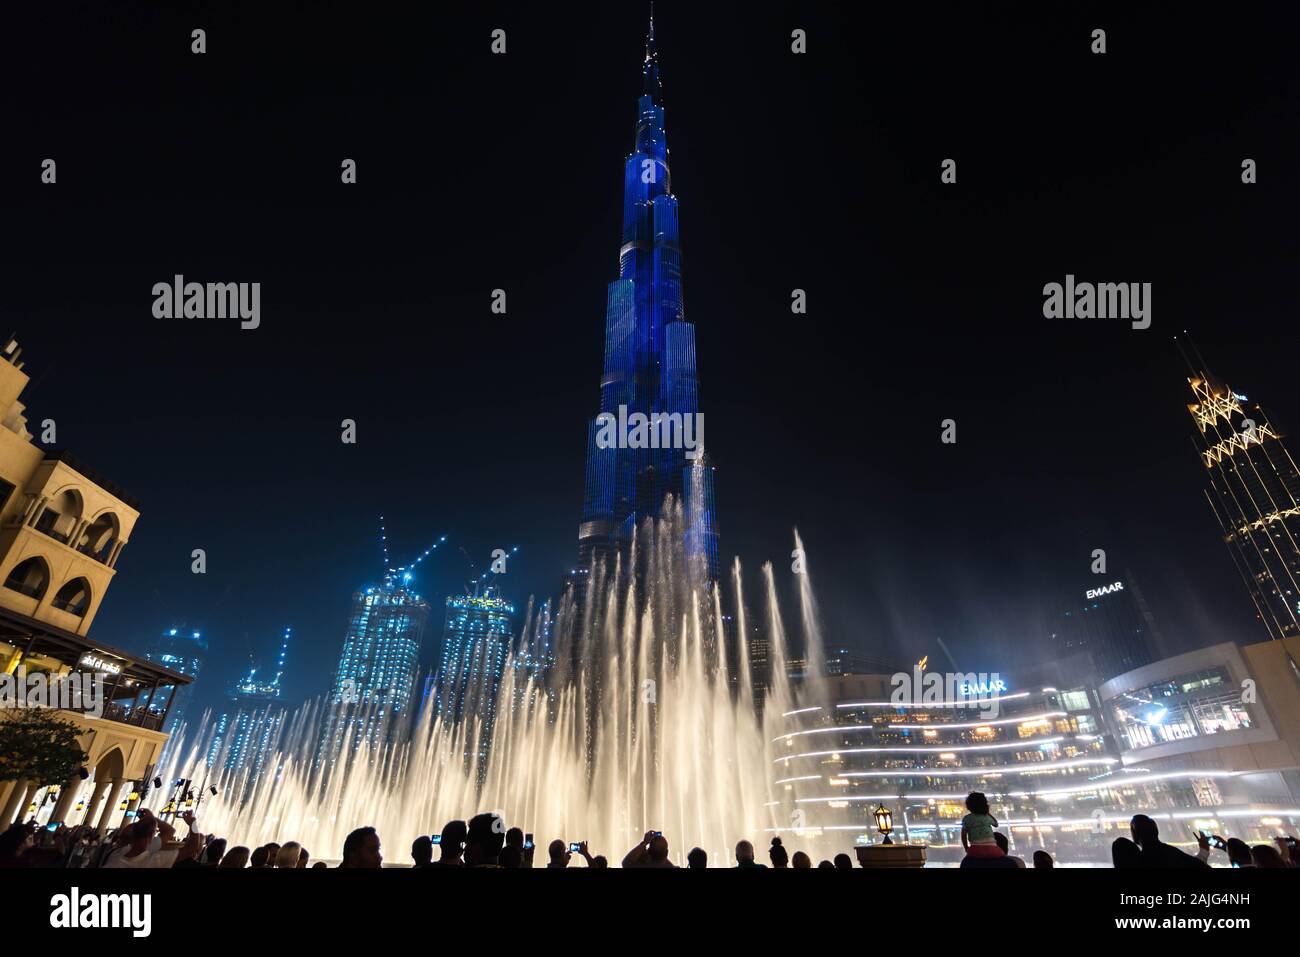 Dubai, United Arab Emirates: Amazing light and fountains show on the Burj Khalifa, the tallest building skyscraper in the world, illuminated by night Stock Photo